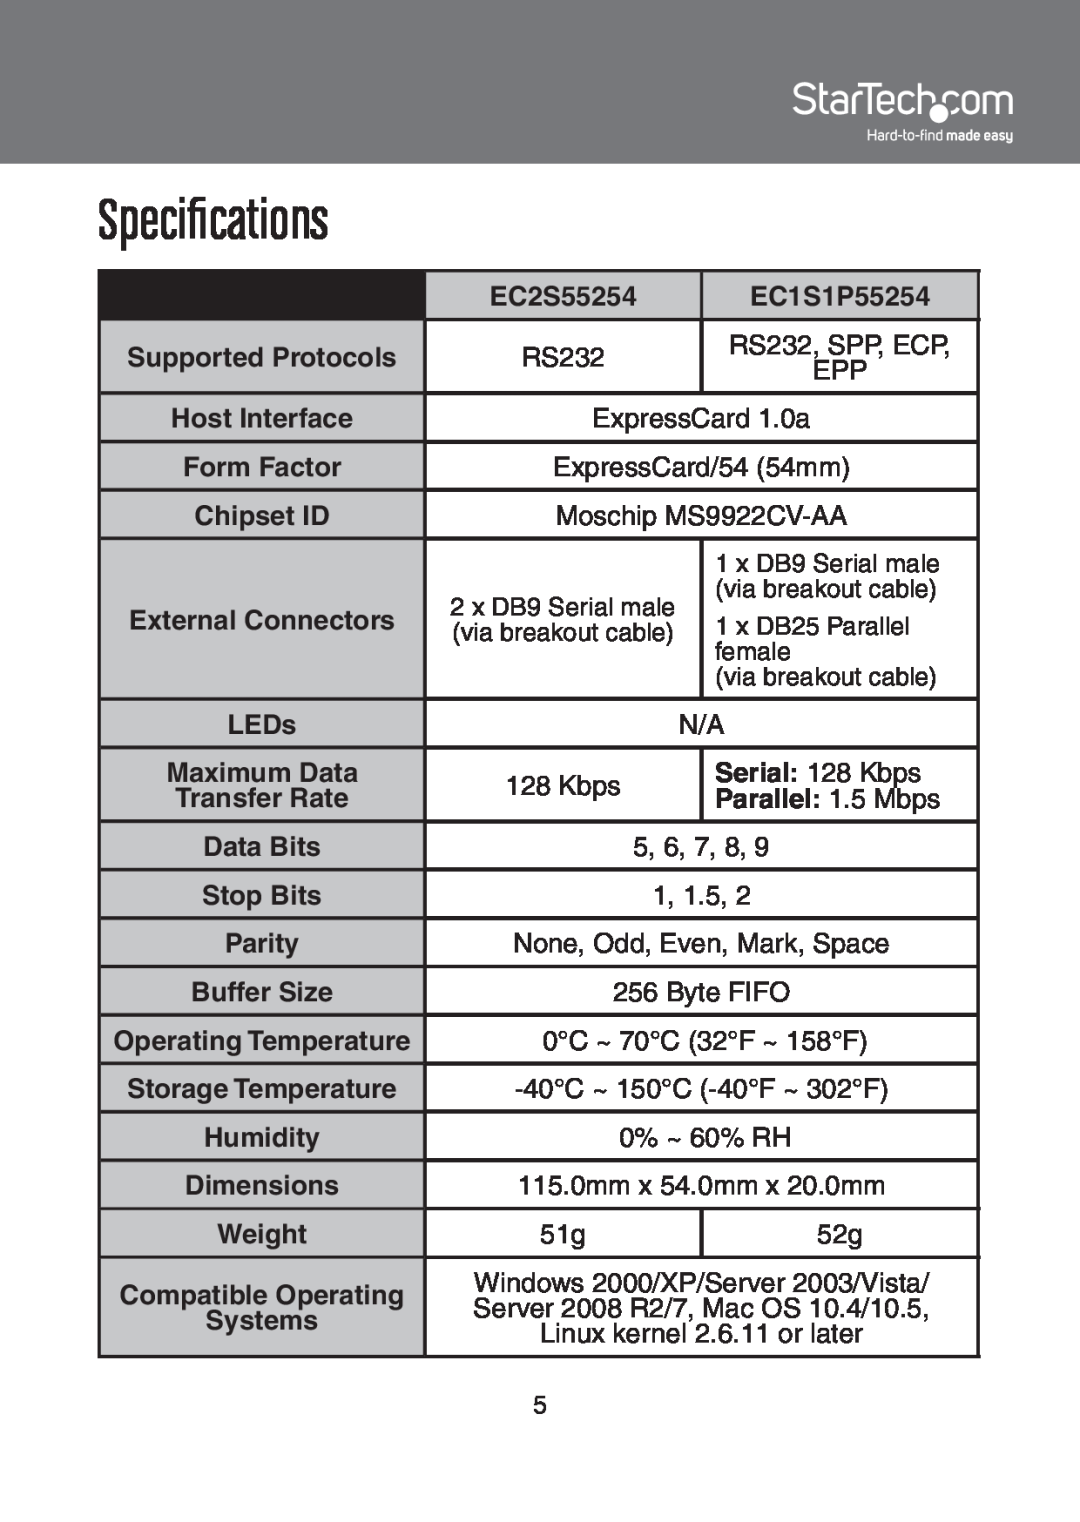 StarTech.com EC2S55254 Specifications, EC1S1P55254, Chipset ID, LEDs, Serial 128 Kbps, Parallel 1.5 Mbps, Stop Bits 